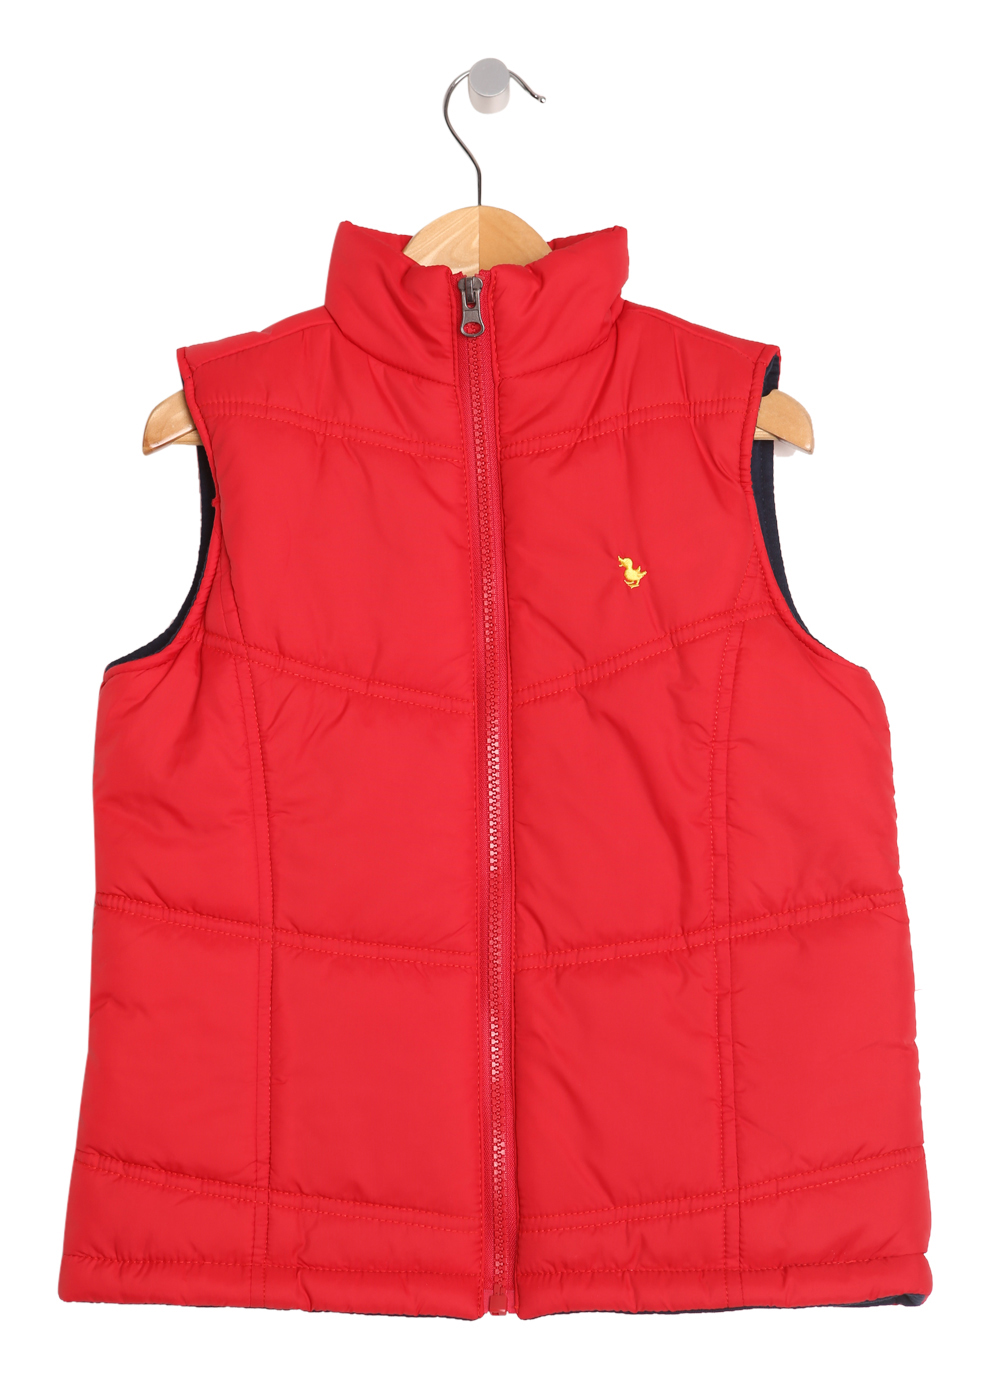 Red Sleeveless Jacket (Red Gilet)